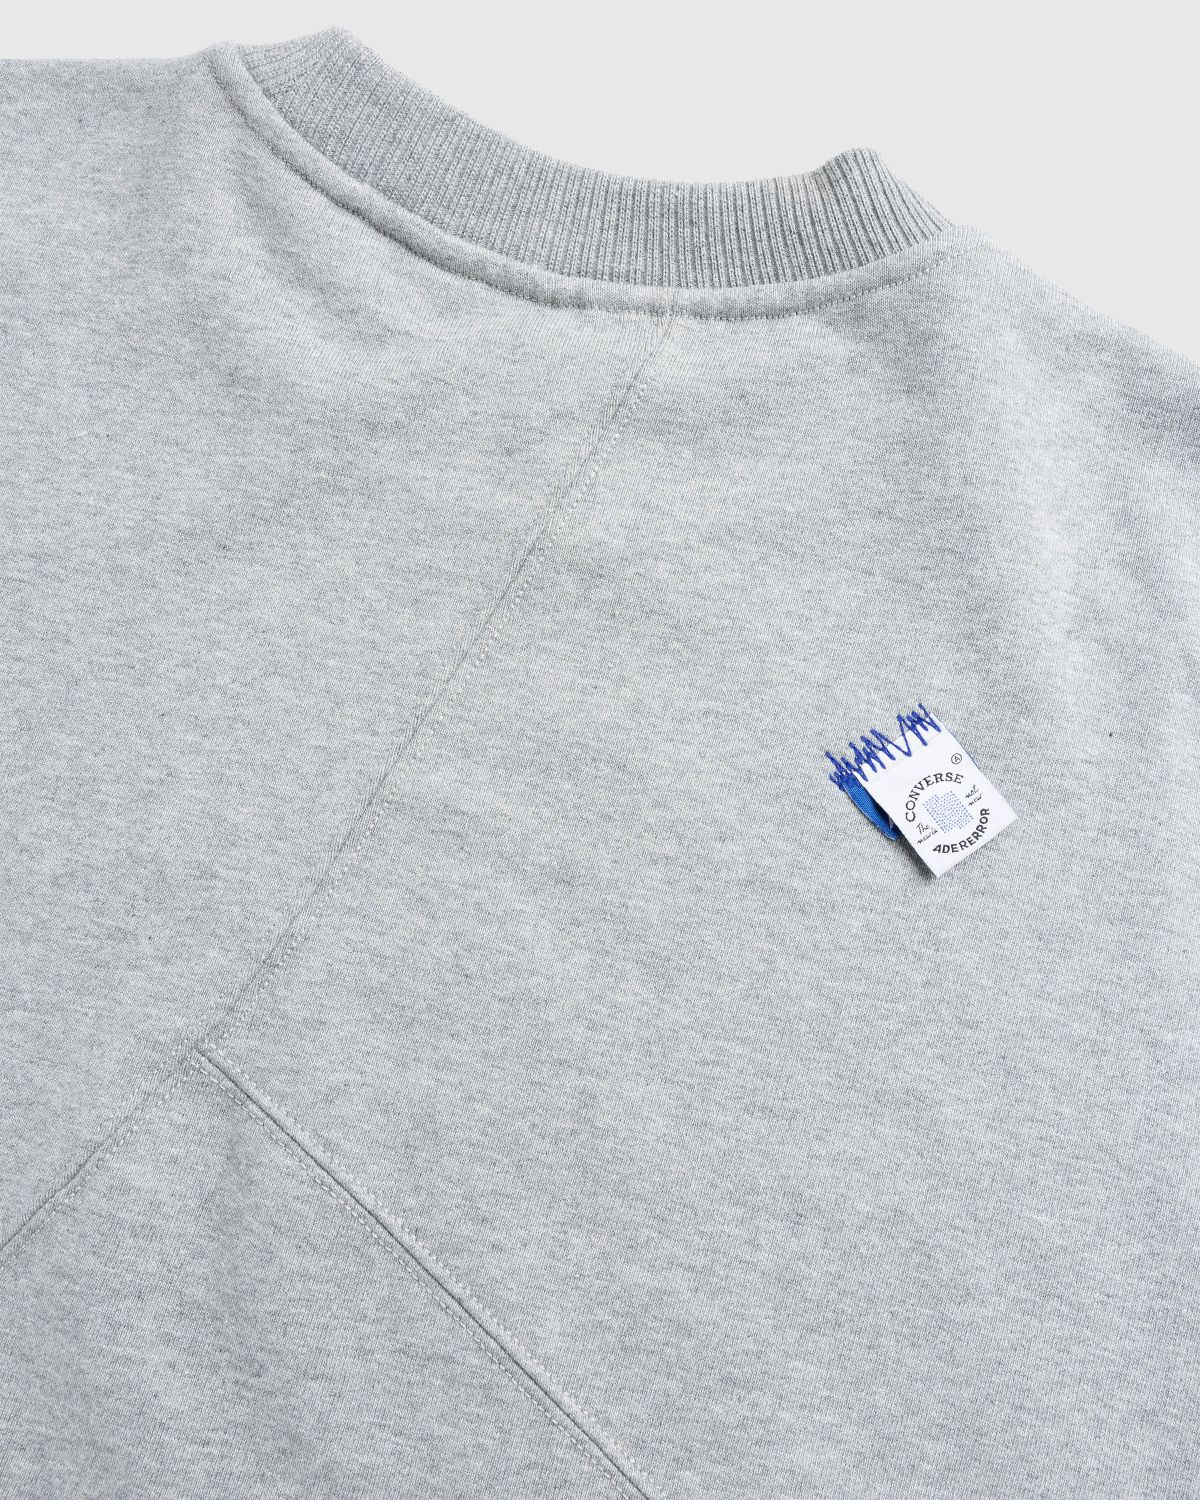 Converse x Ader Error – Shapes Crew Sweatshirt Vintage Grey Heather |  Highsnobiety Shop